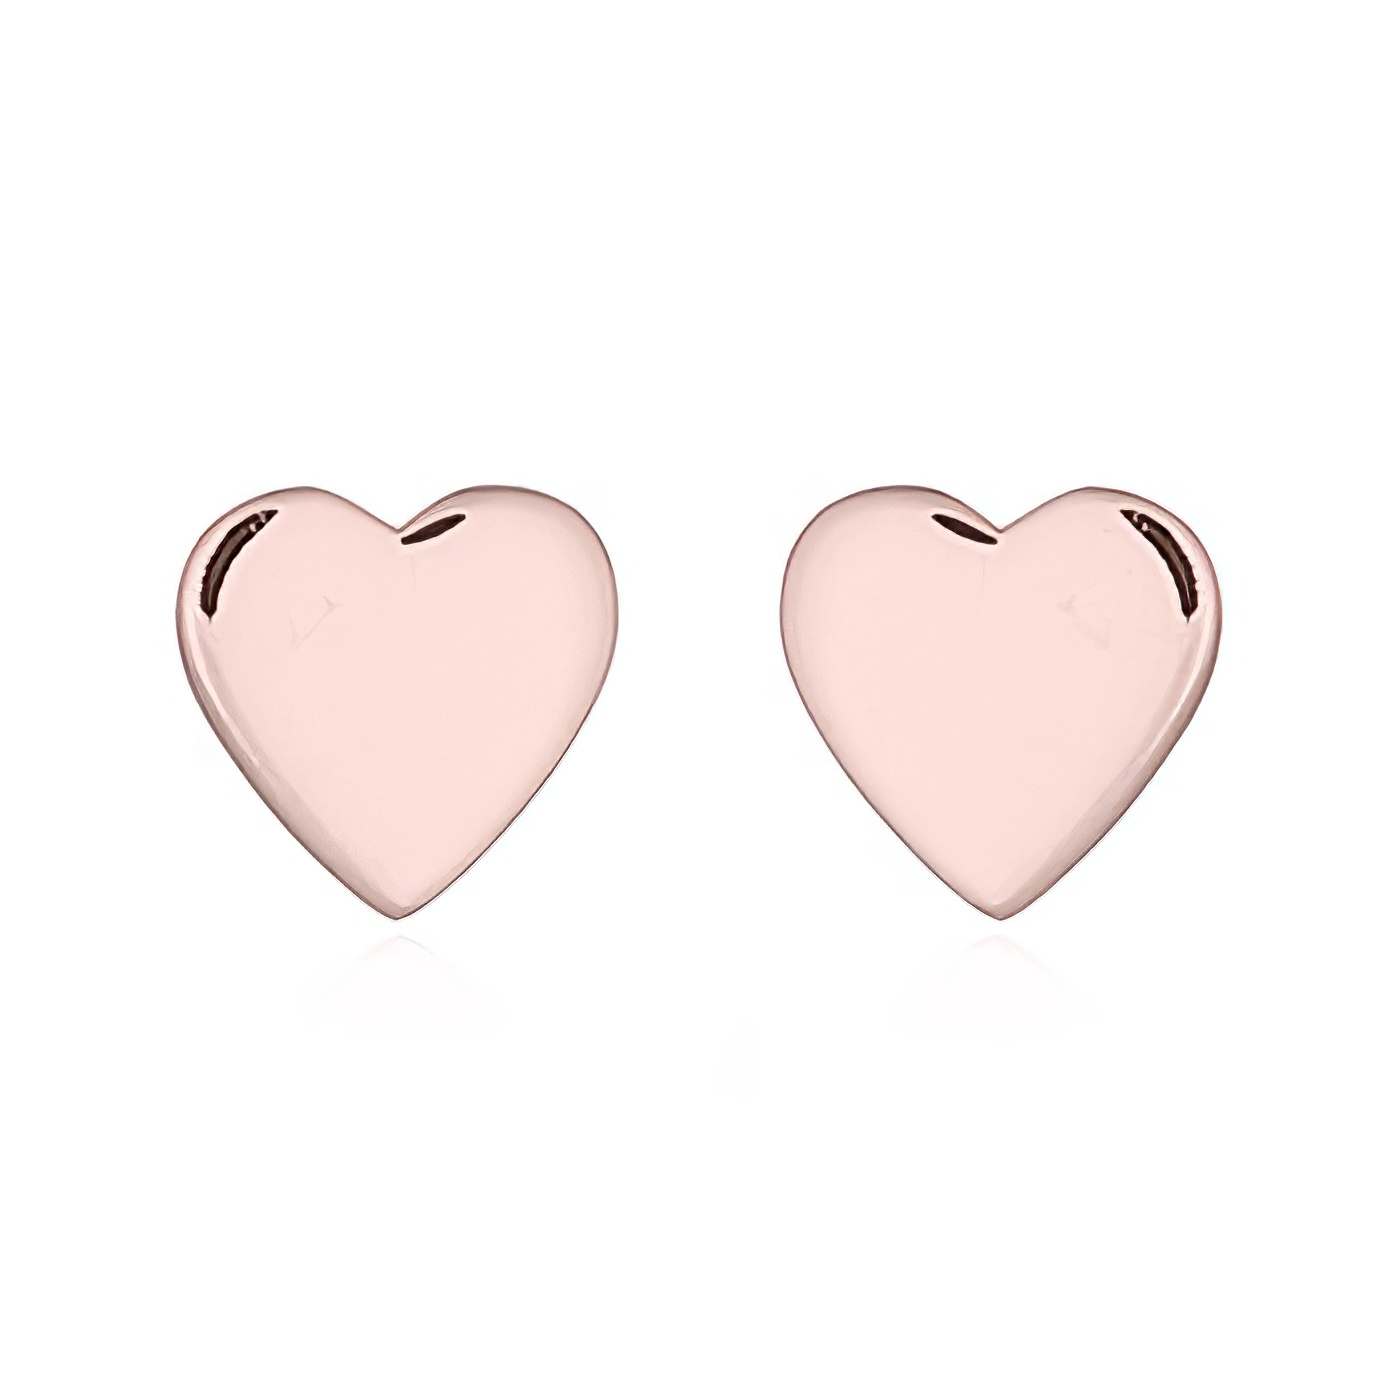 Little Plain Heart Silver 925 Stud Rose Gold Plated Earrings by BeYindi 